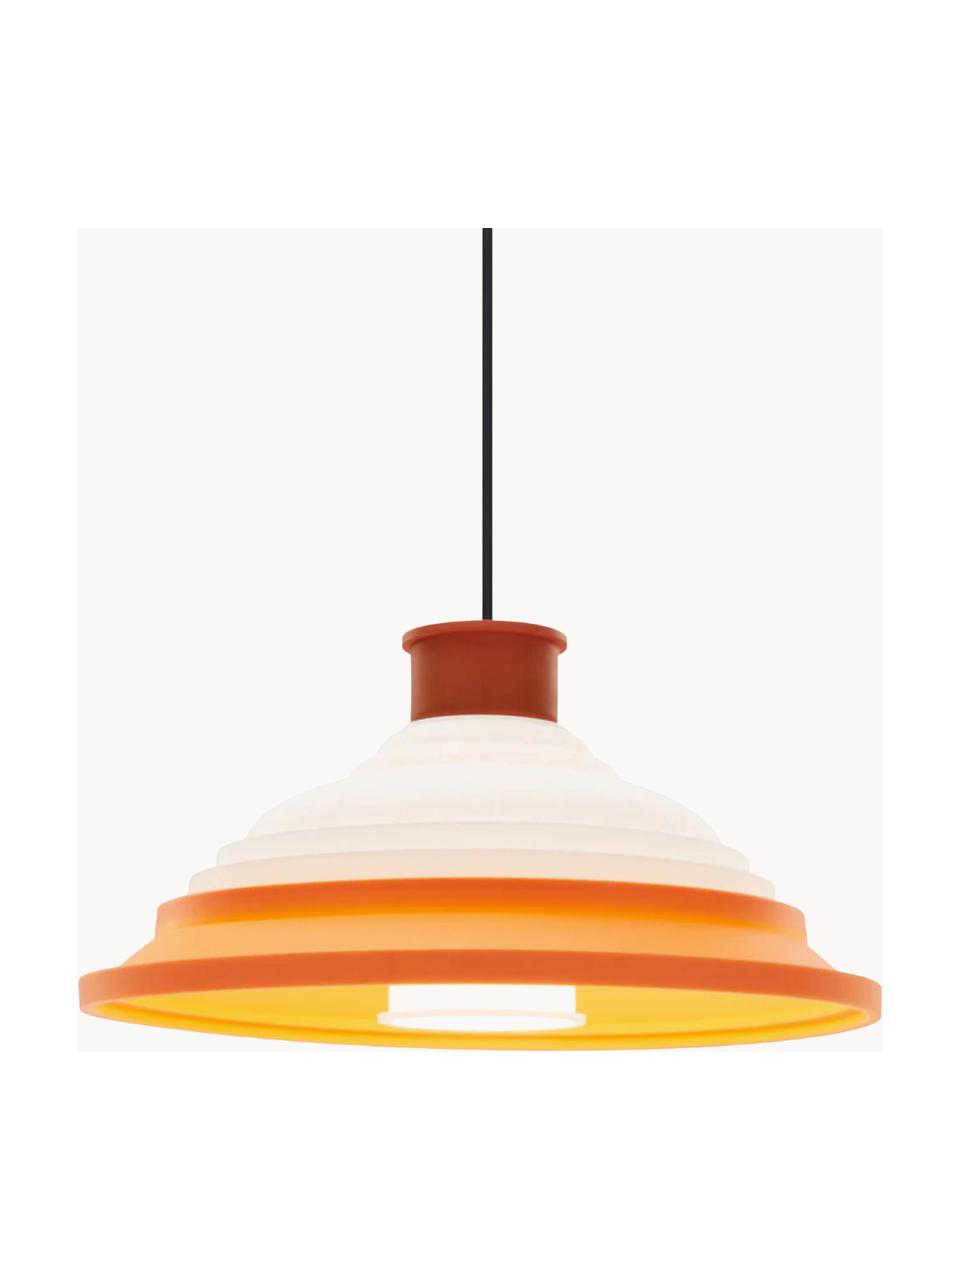 Pendelleuchte CL5, Lampenschirm: Silikon, Kunststoff, Orange, Weiss, Rostrot, Ø 41 x H 22 cm